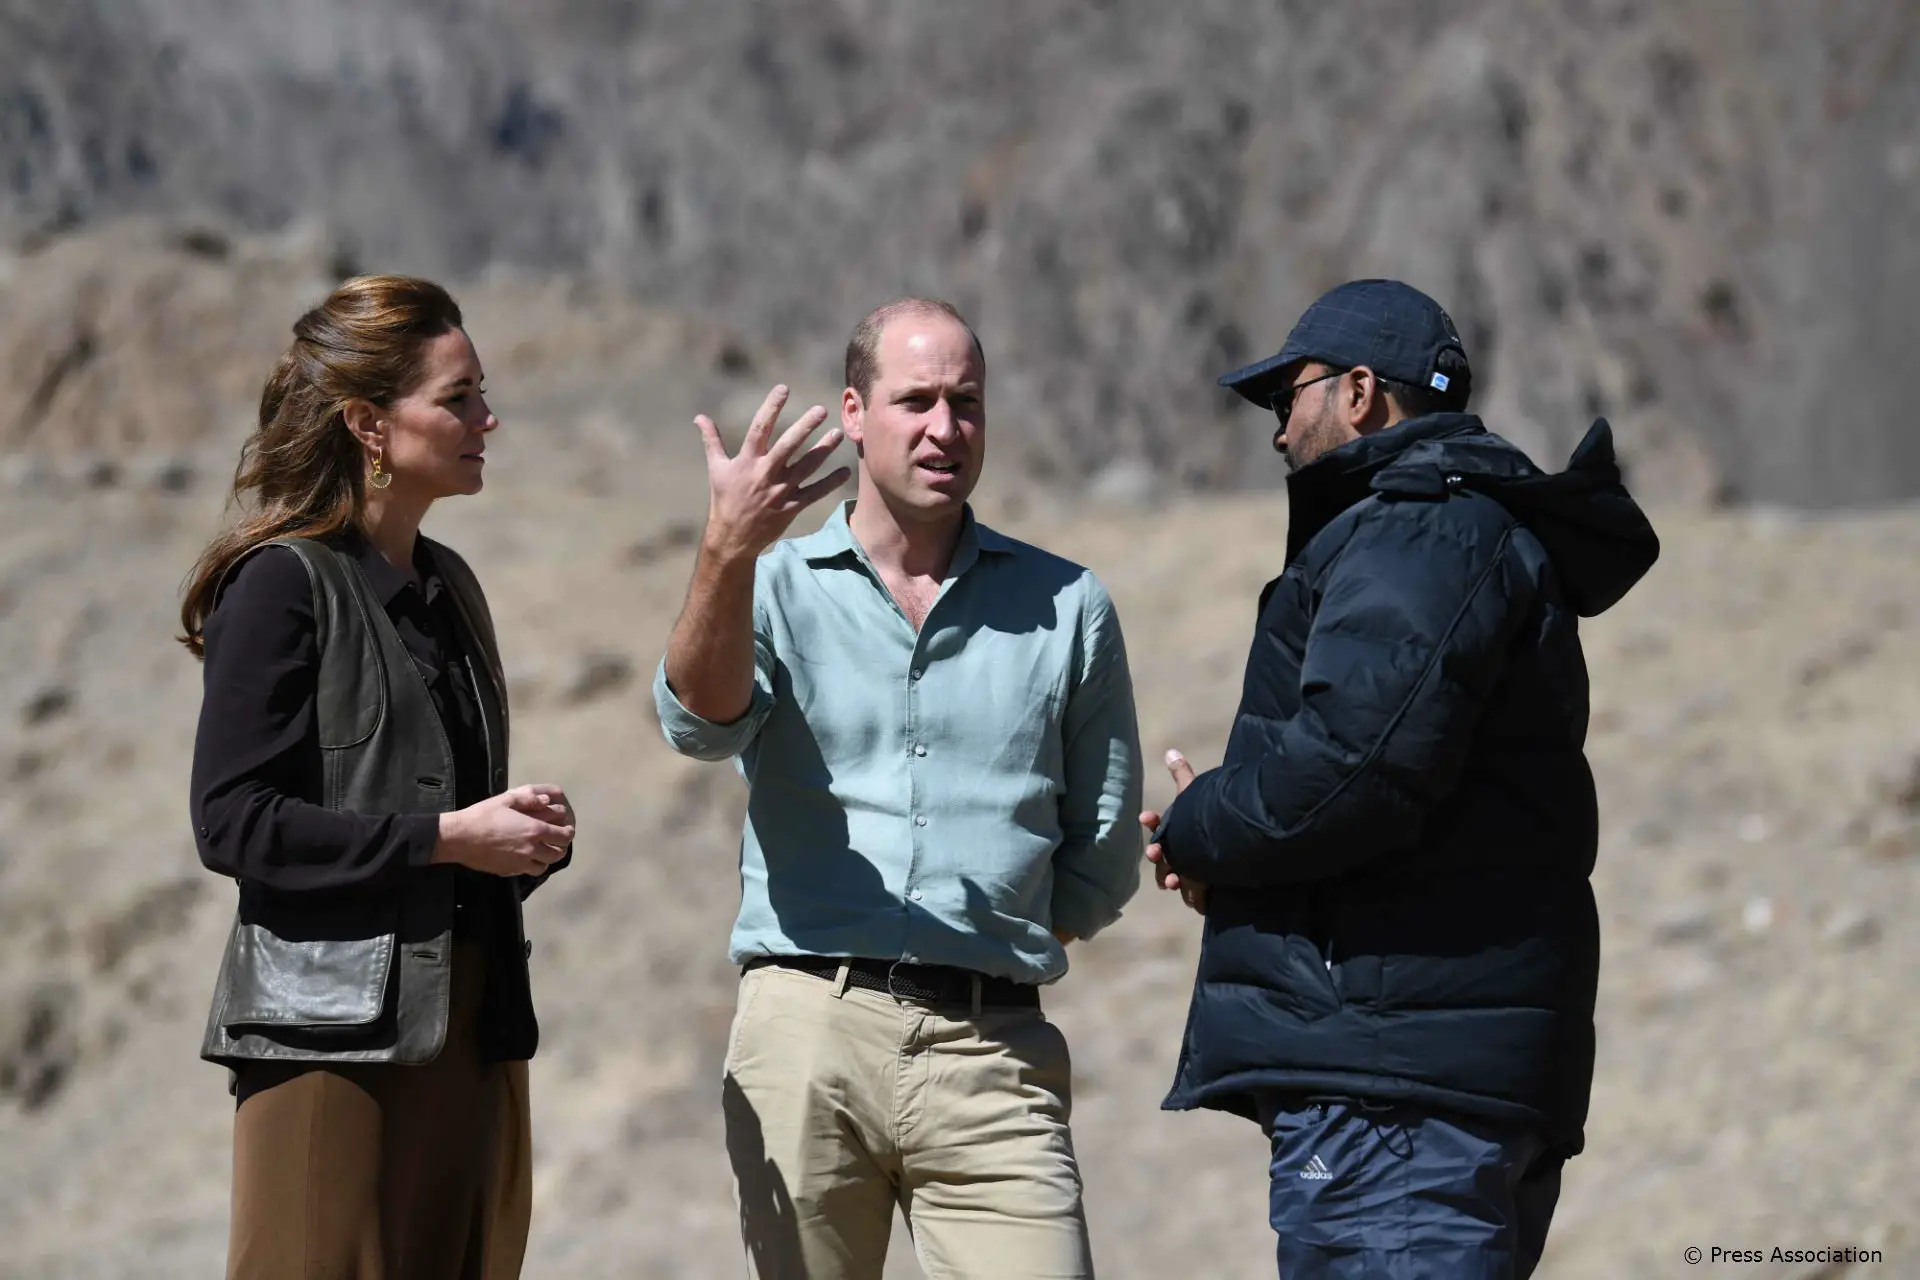 Duke and Duchess of Cambridge visited Hindu Kush region in Chitral during Pakistan visit1